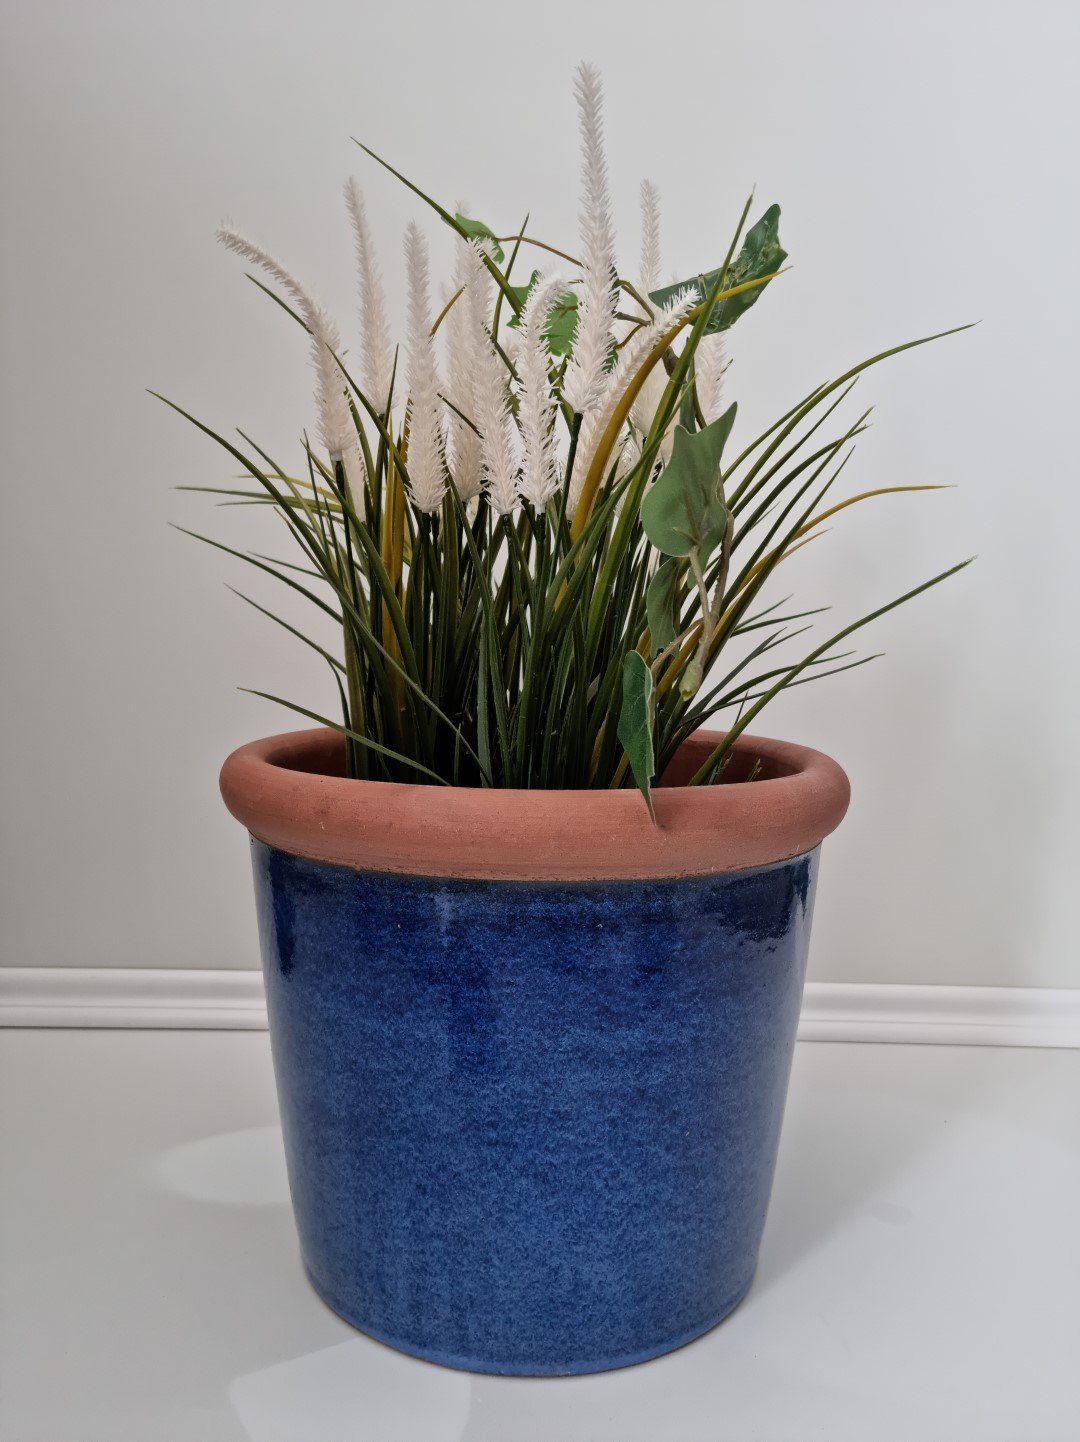 Teramico Pflanzkübel Blumentopf Keramik "Southfork" 20x18cm Blau Royal, 100% Frostfest